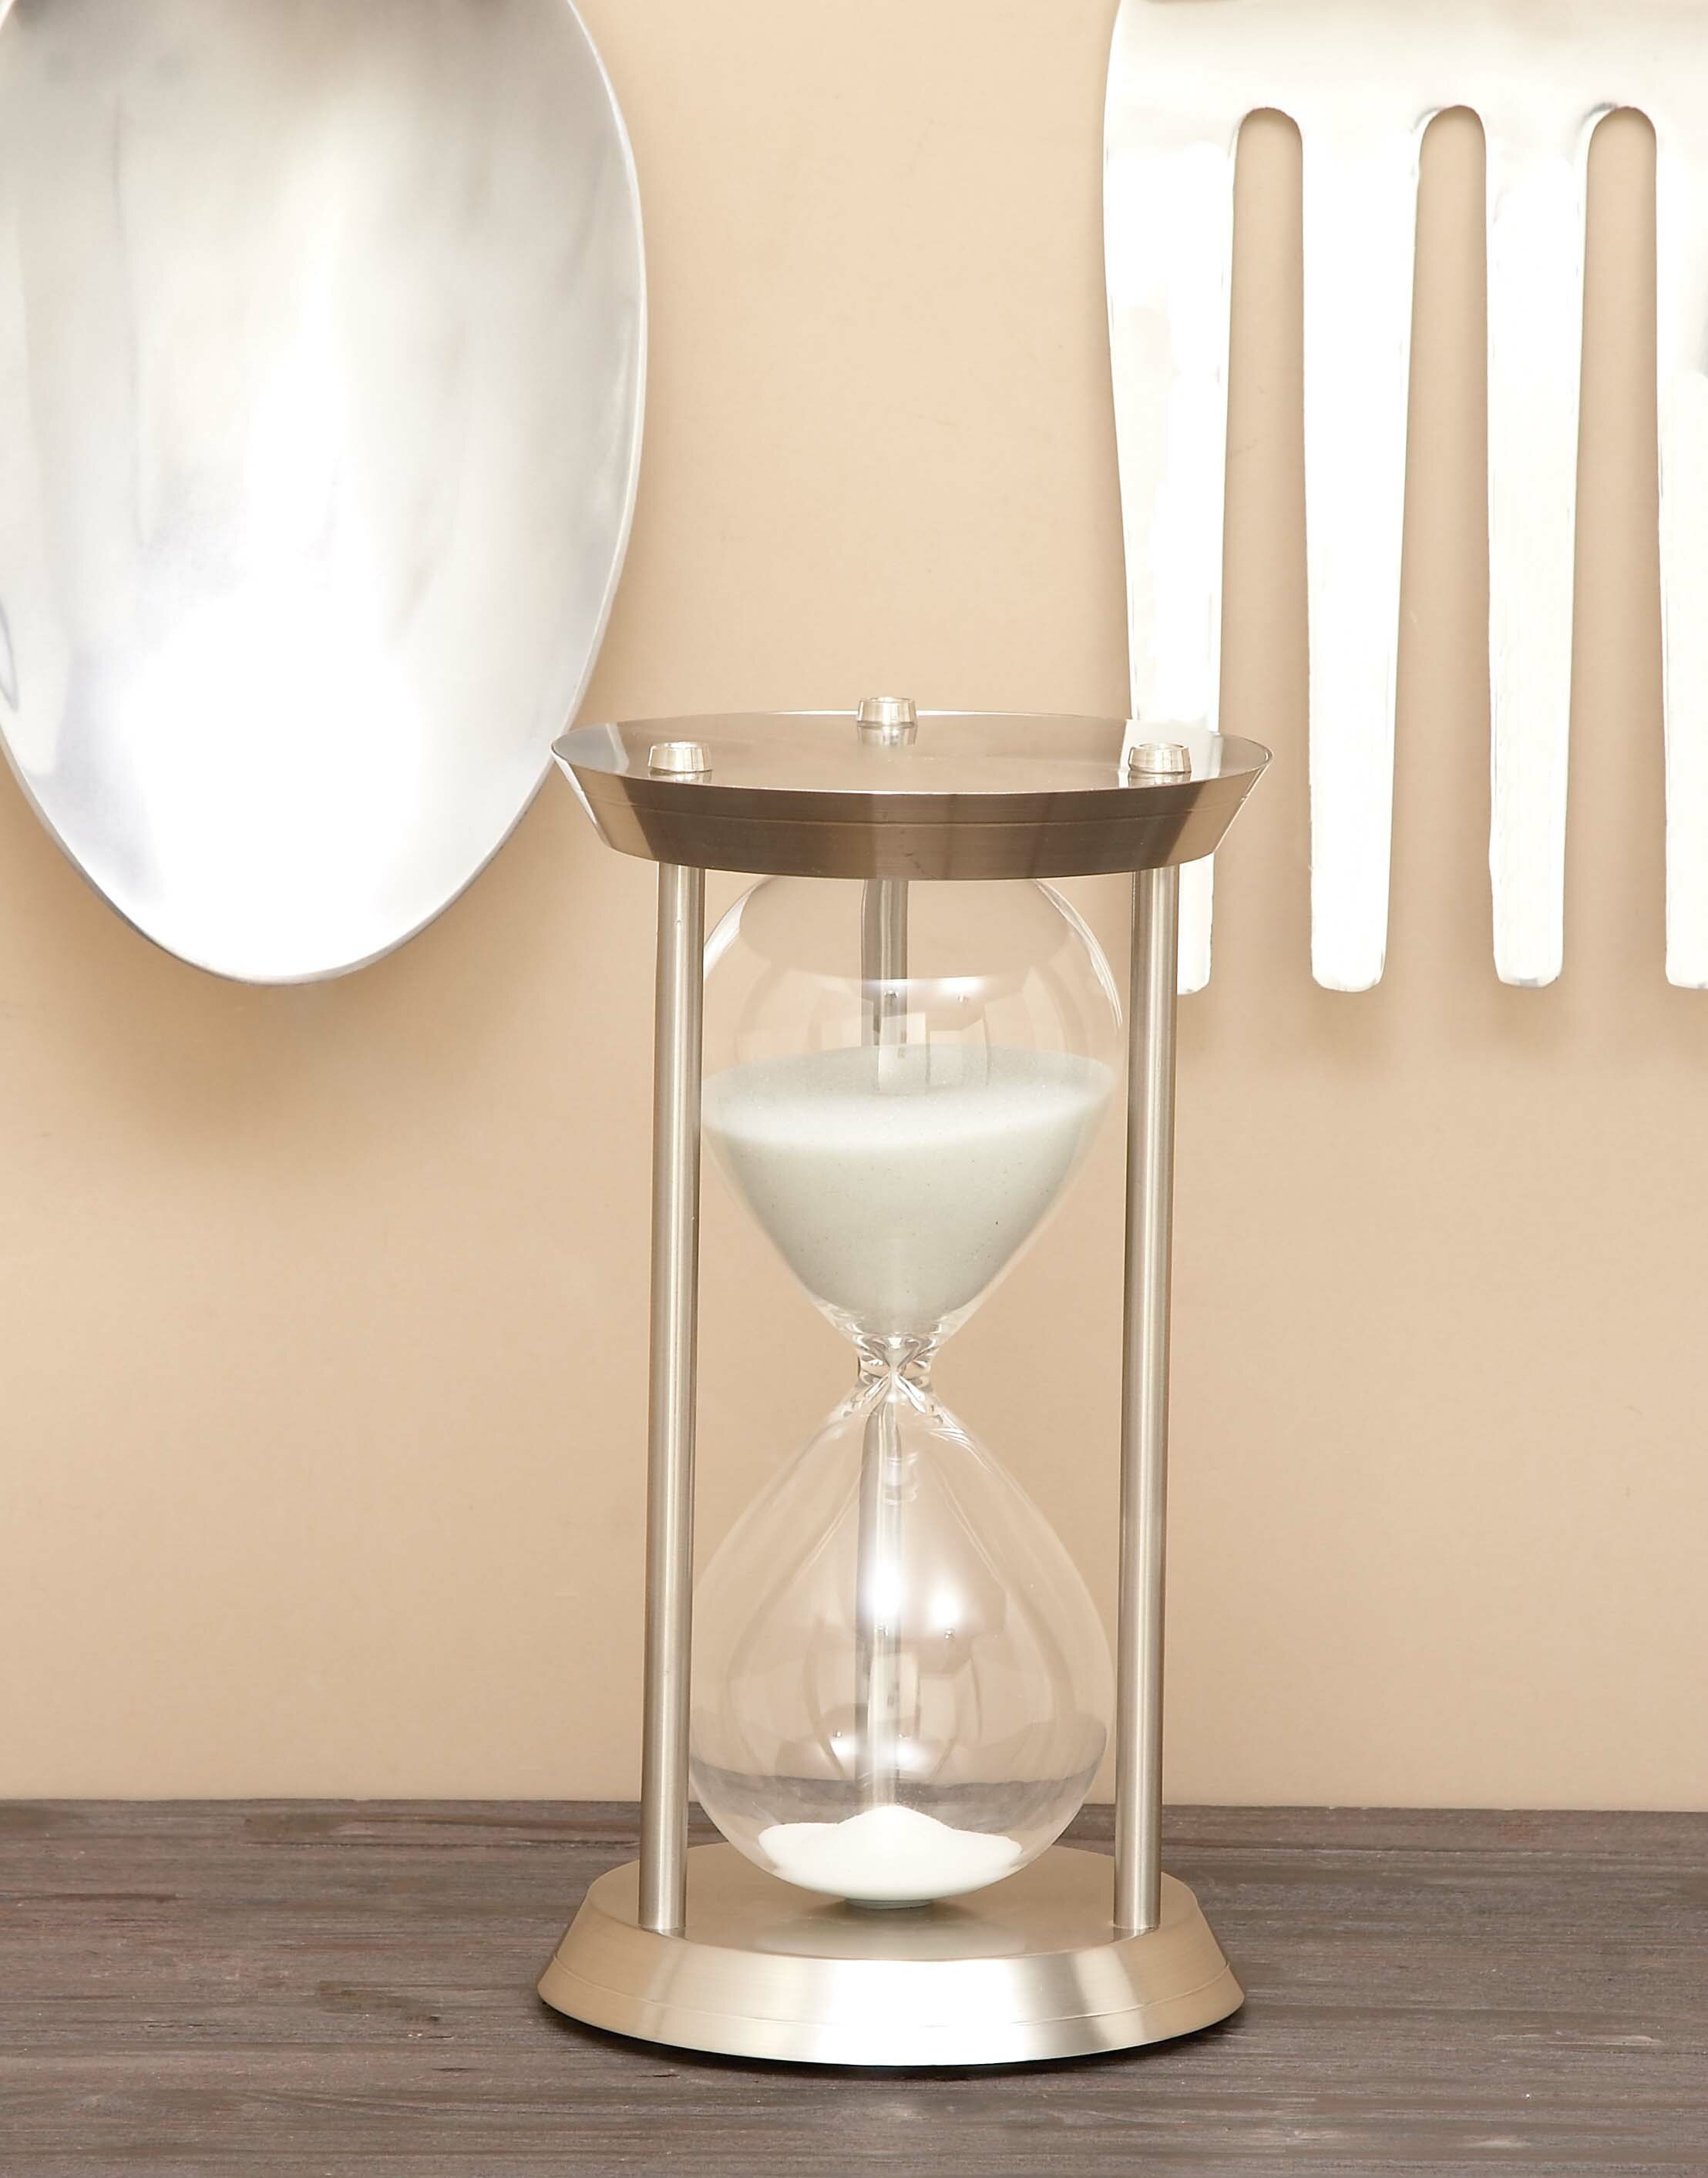 minute hourglass